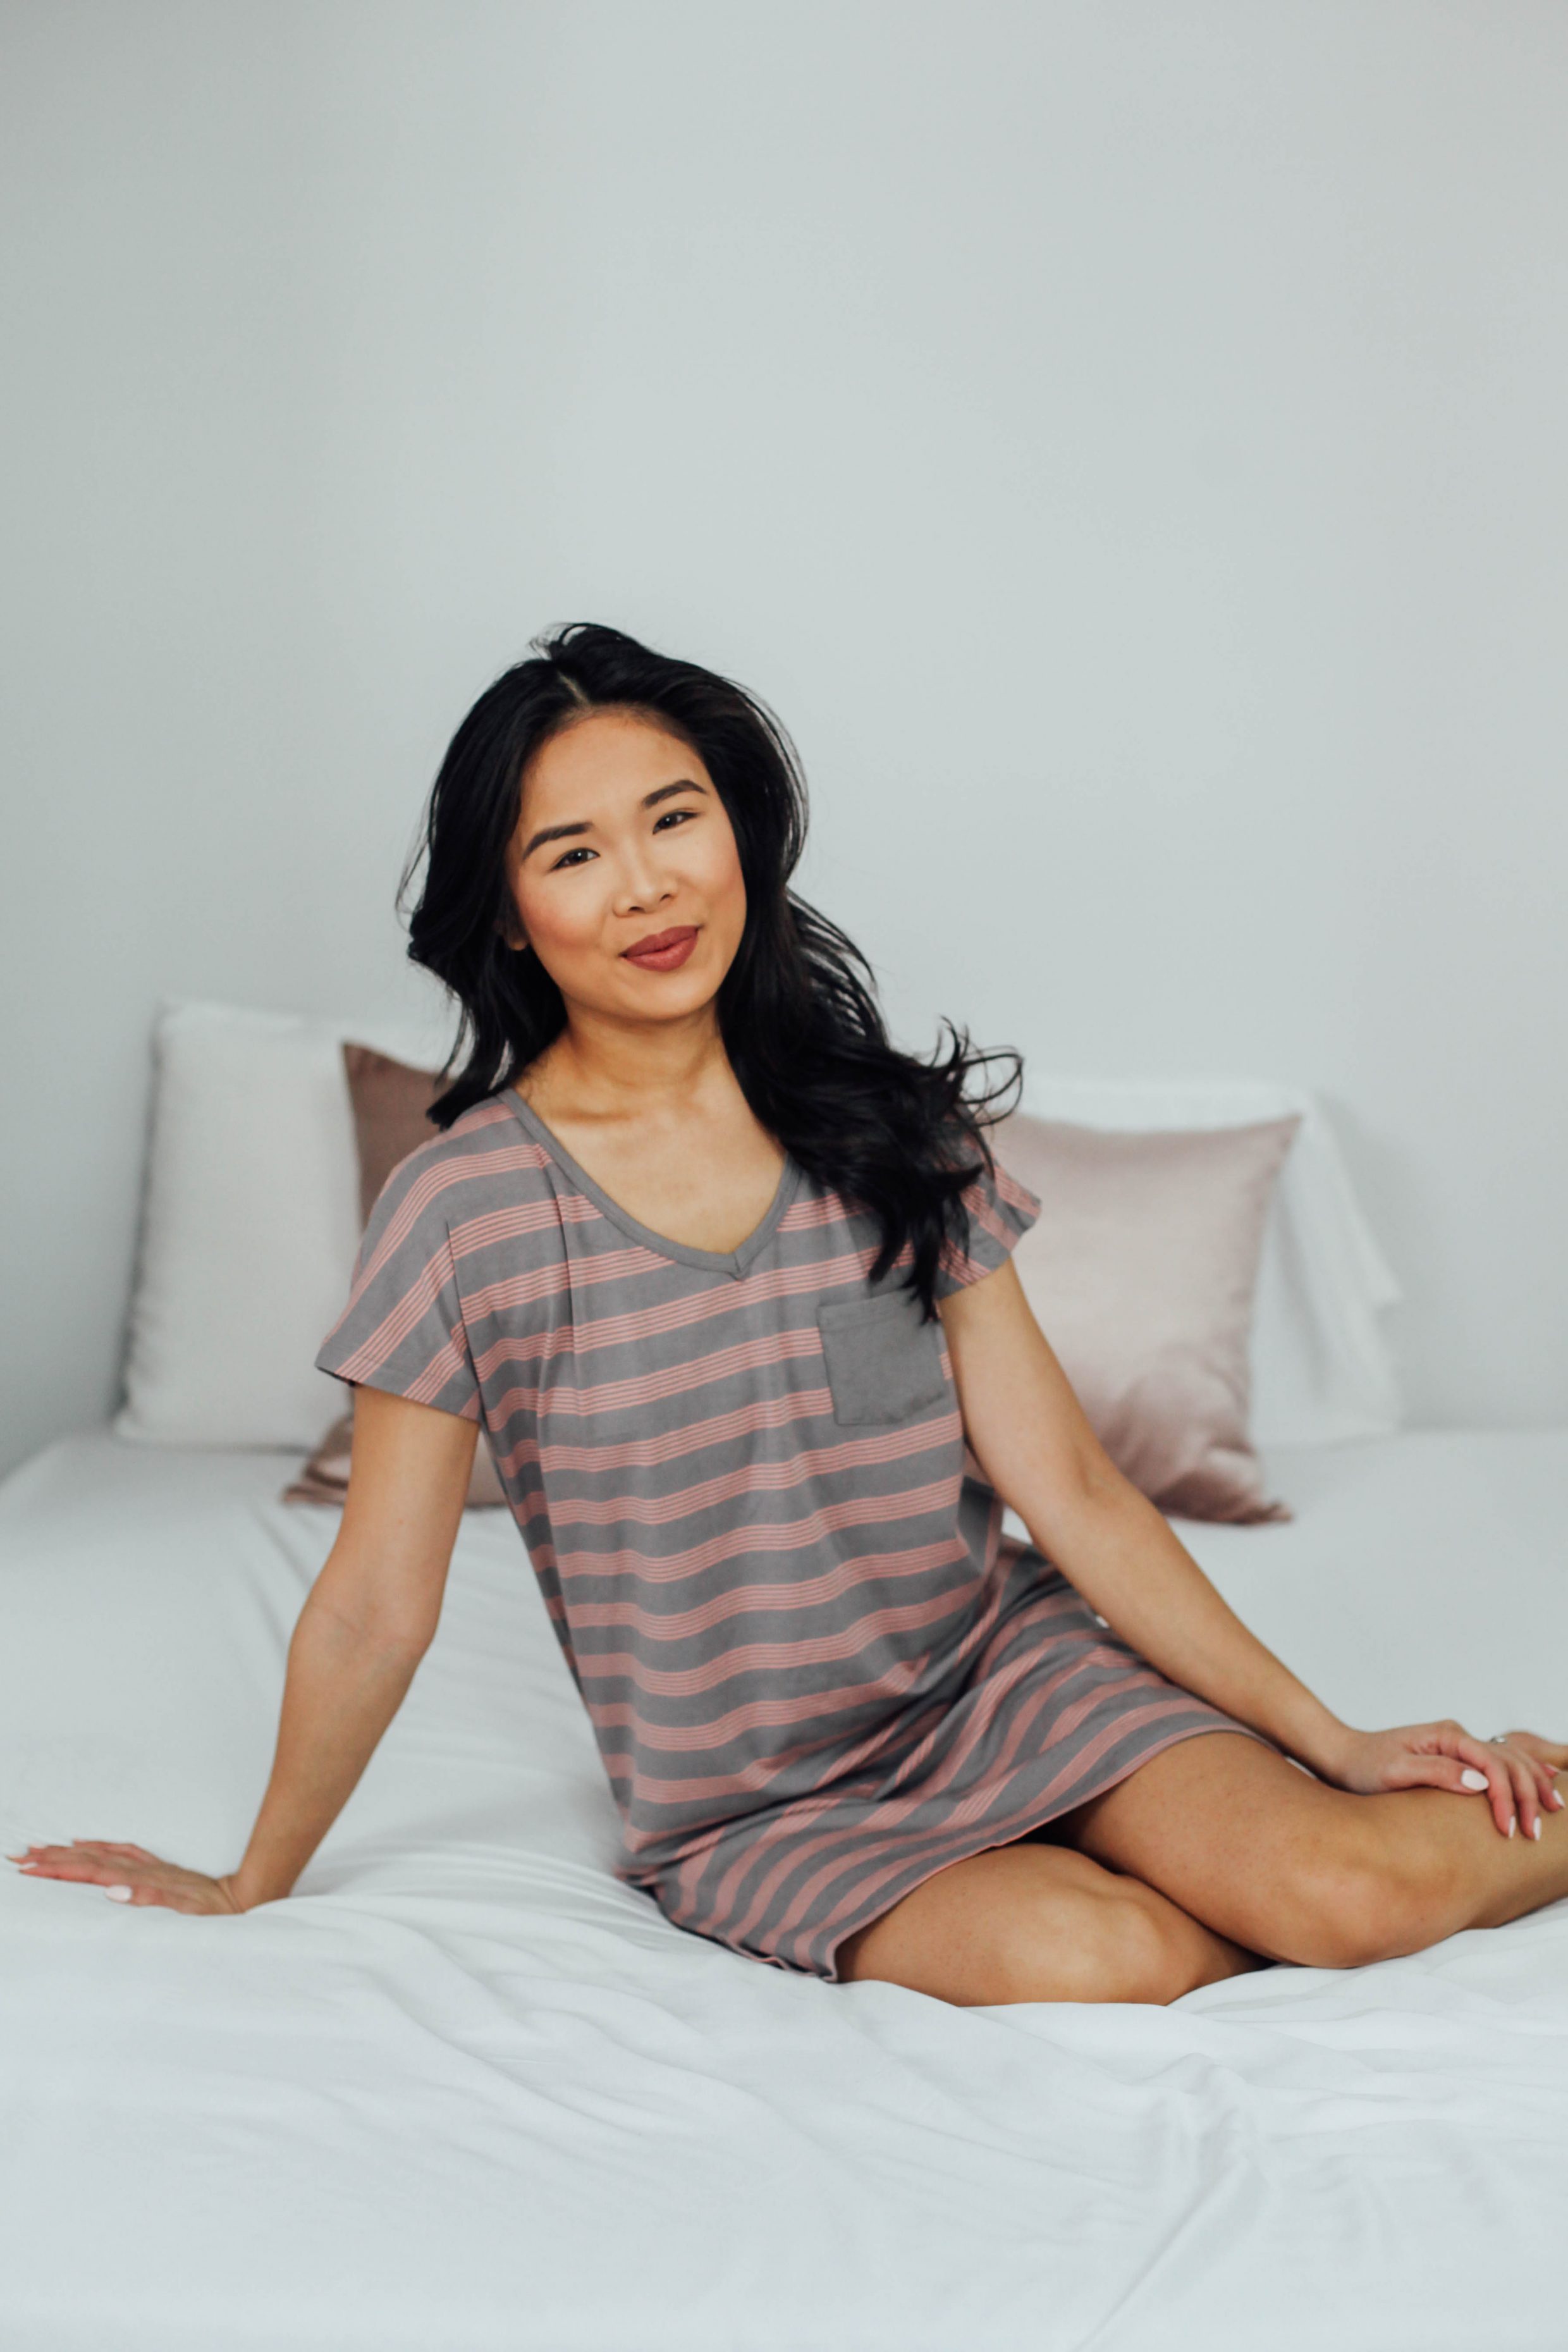 Blogger Hoang-Kim wears a sleep shirt by bamboo brand Cariloha